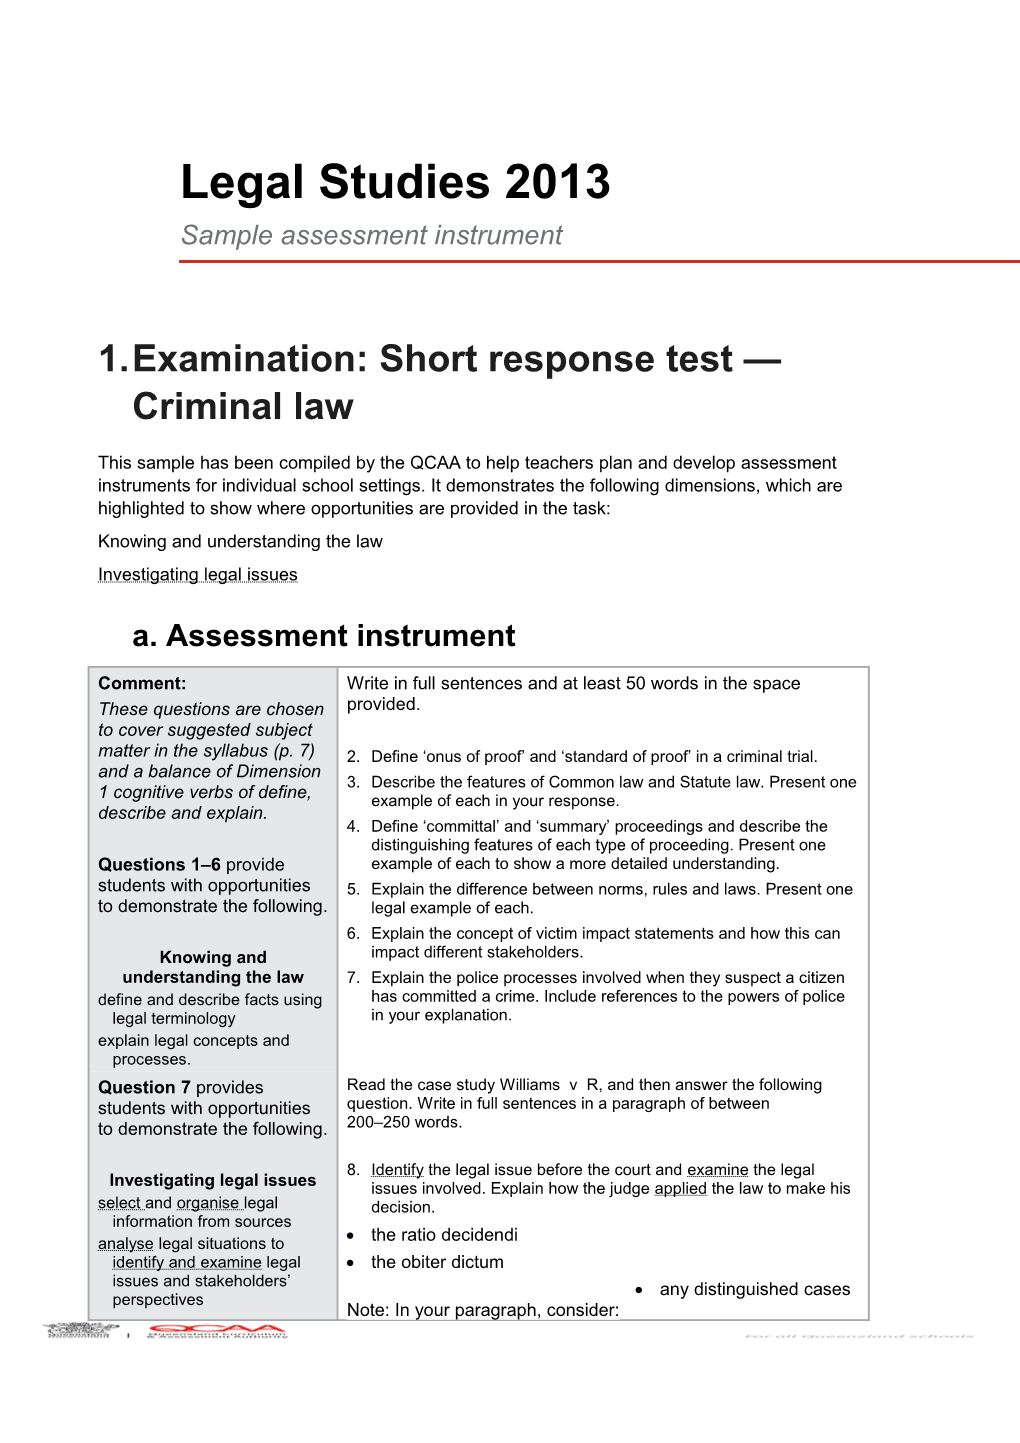 Legal Studies 2013 Examination: Short Response Test Criminal Law Sample Assessment Instrument